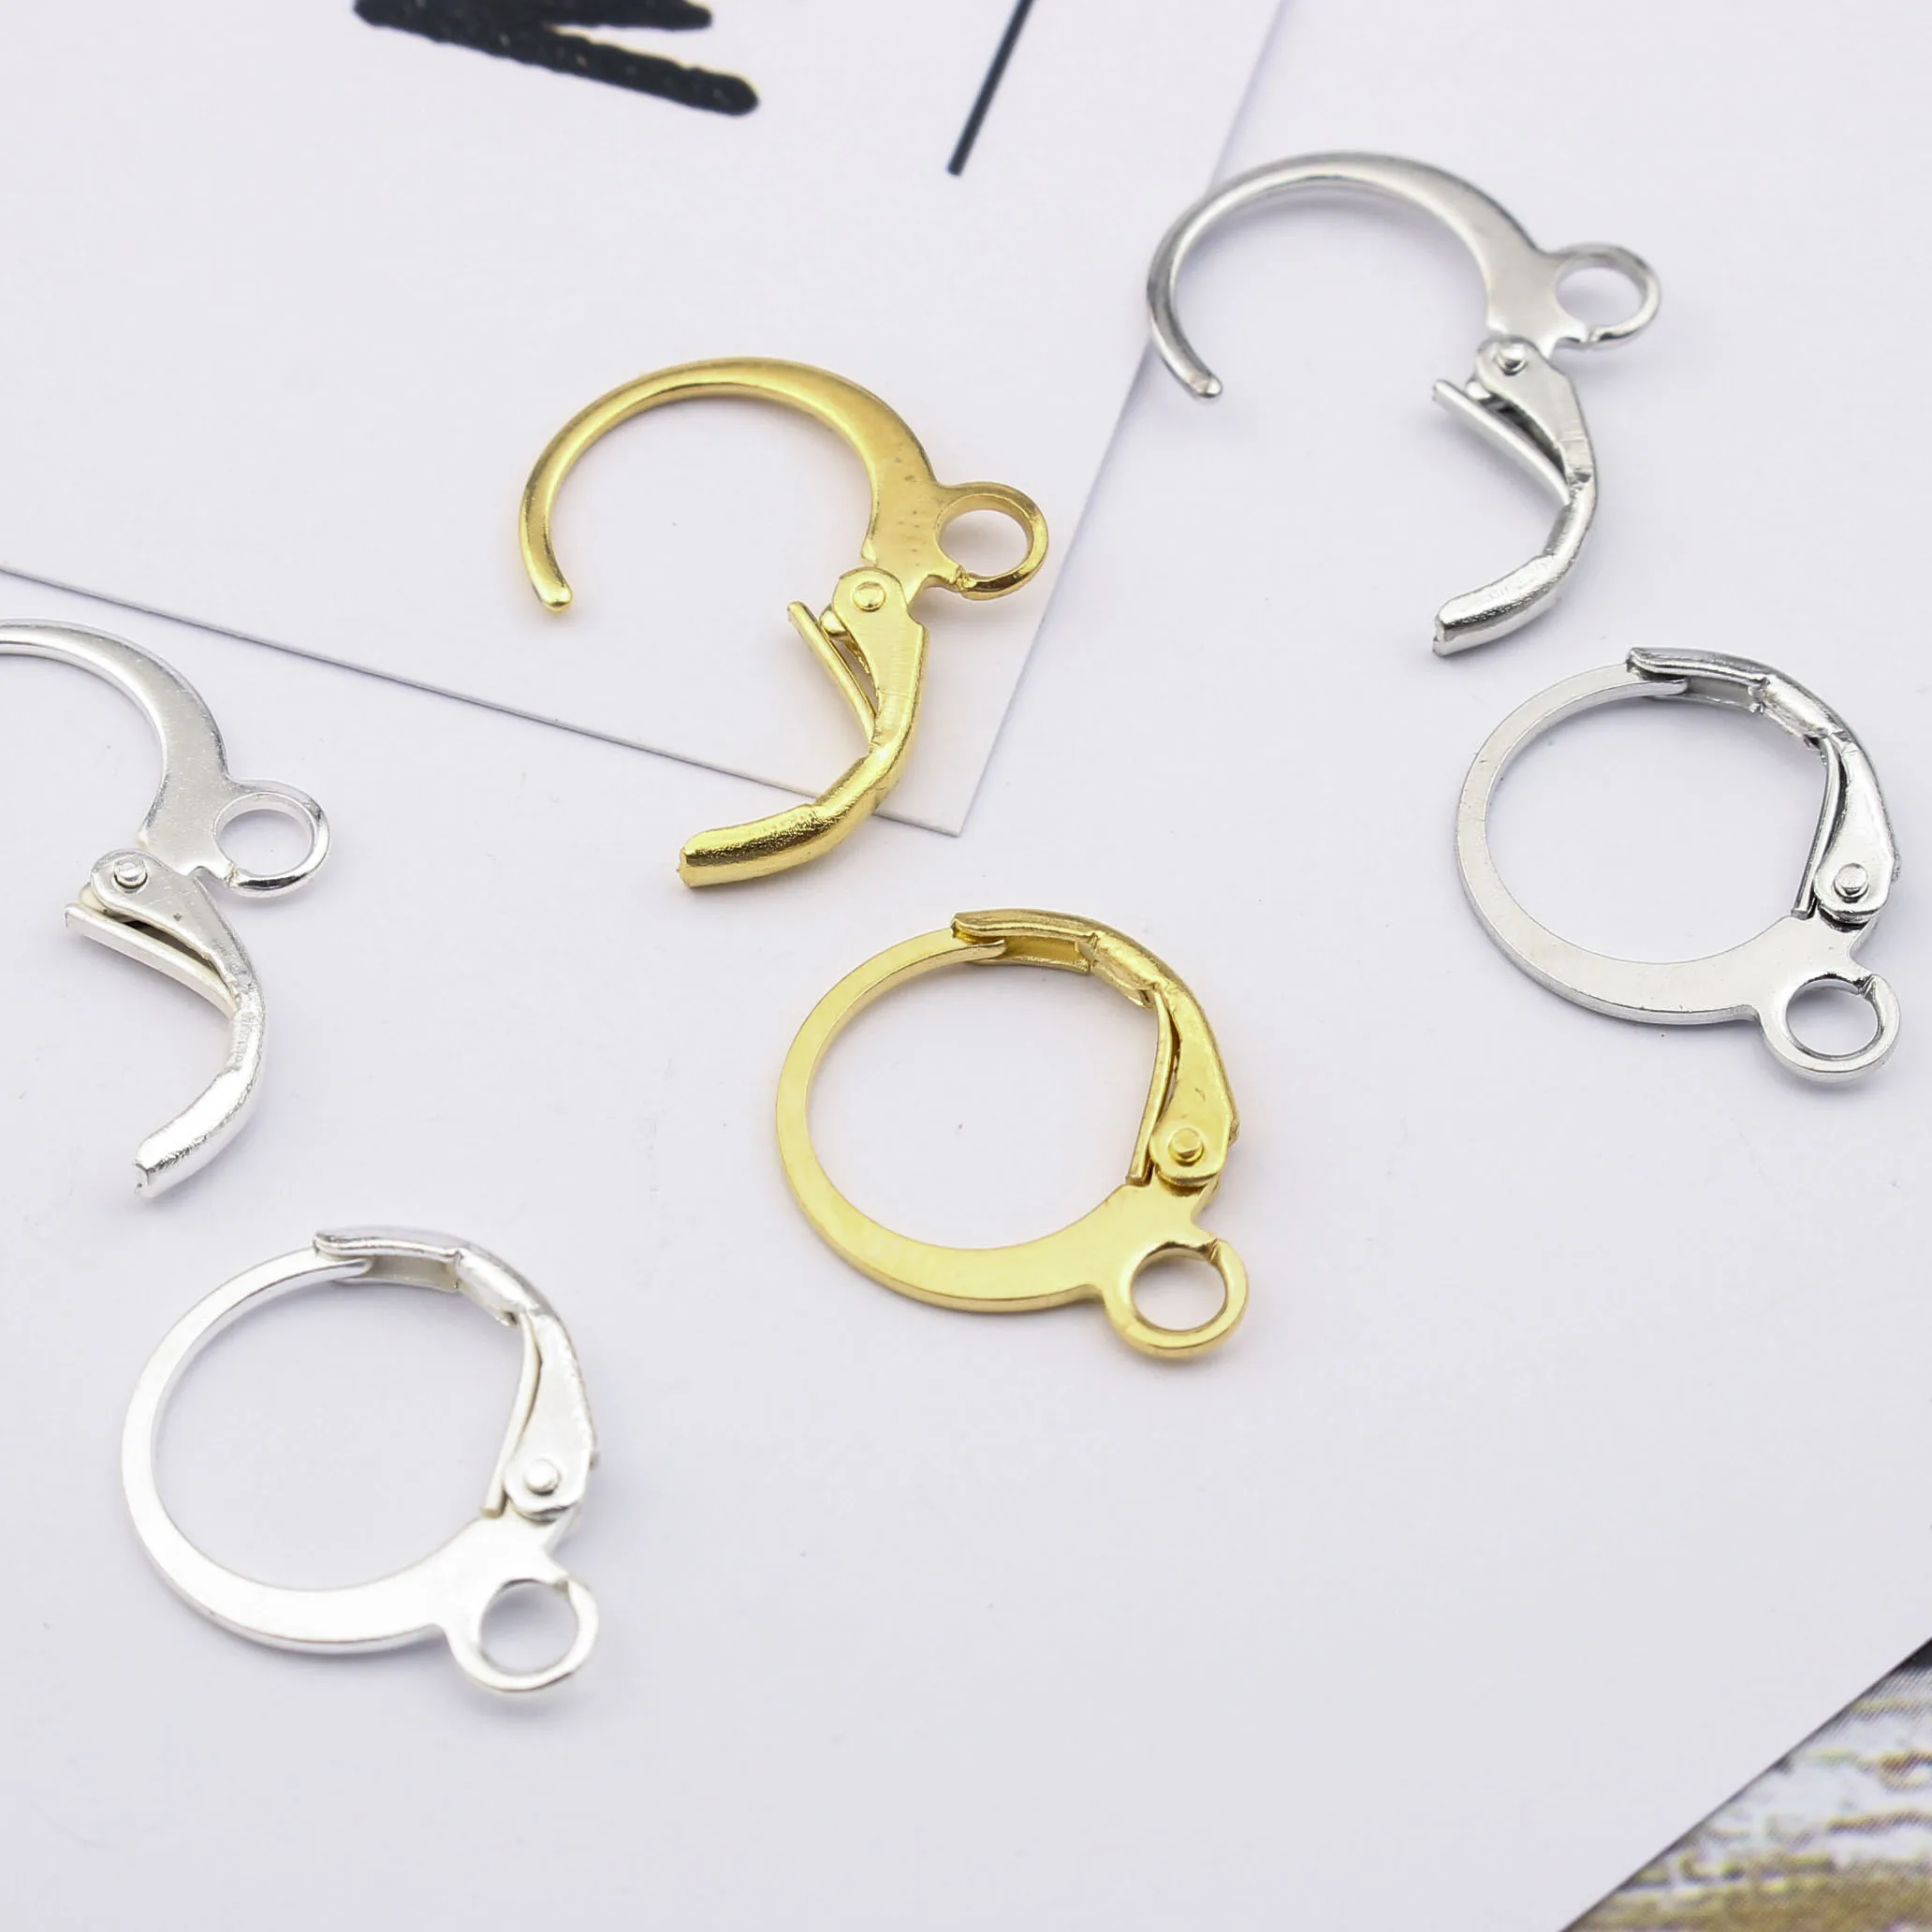 30 pcs of Light Gold color brass round leverback earwire 12mm, bulk gold  lever back earring hook